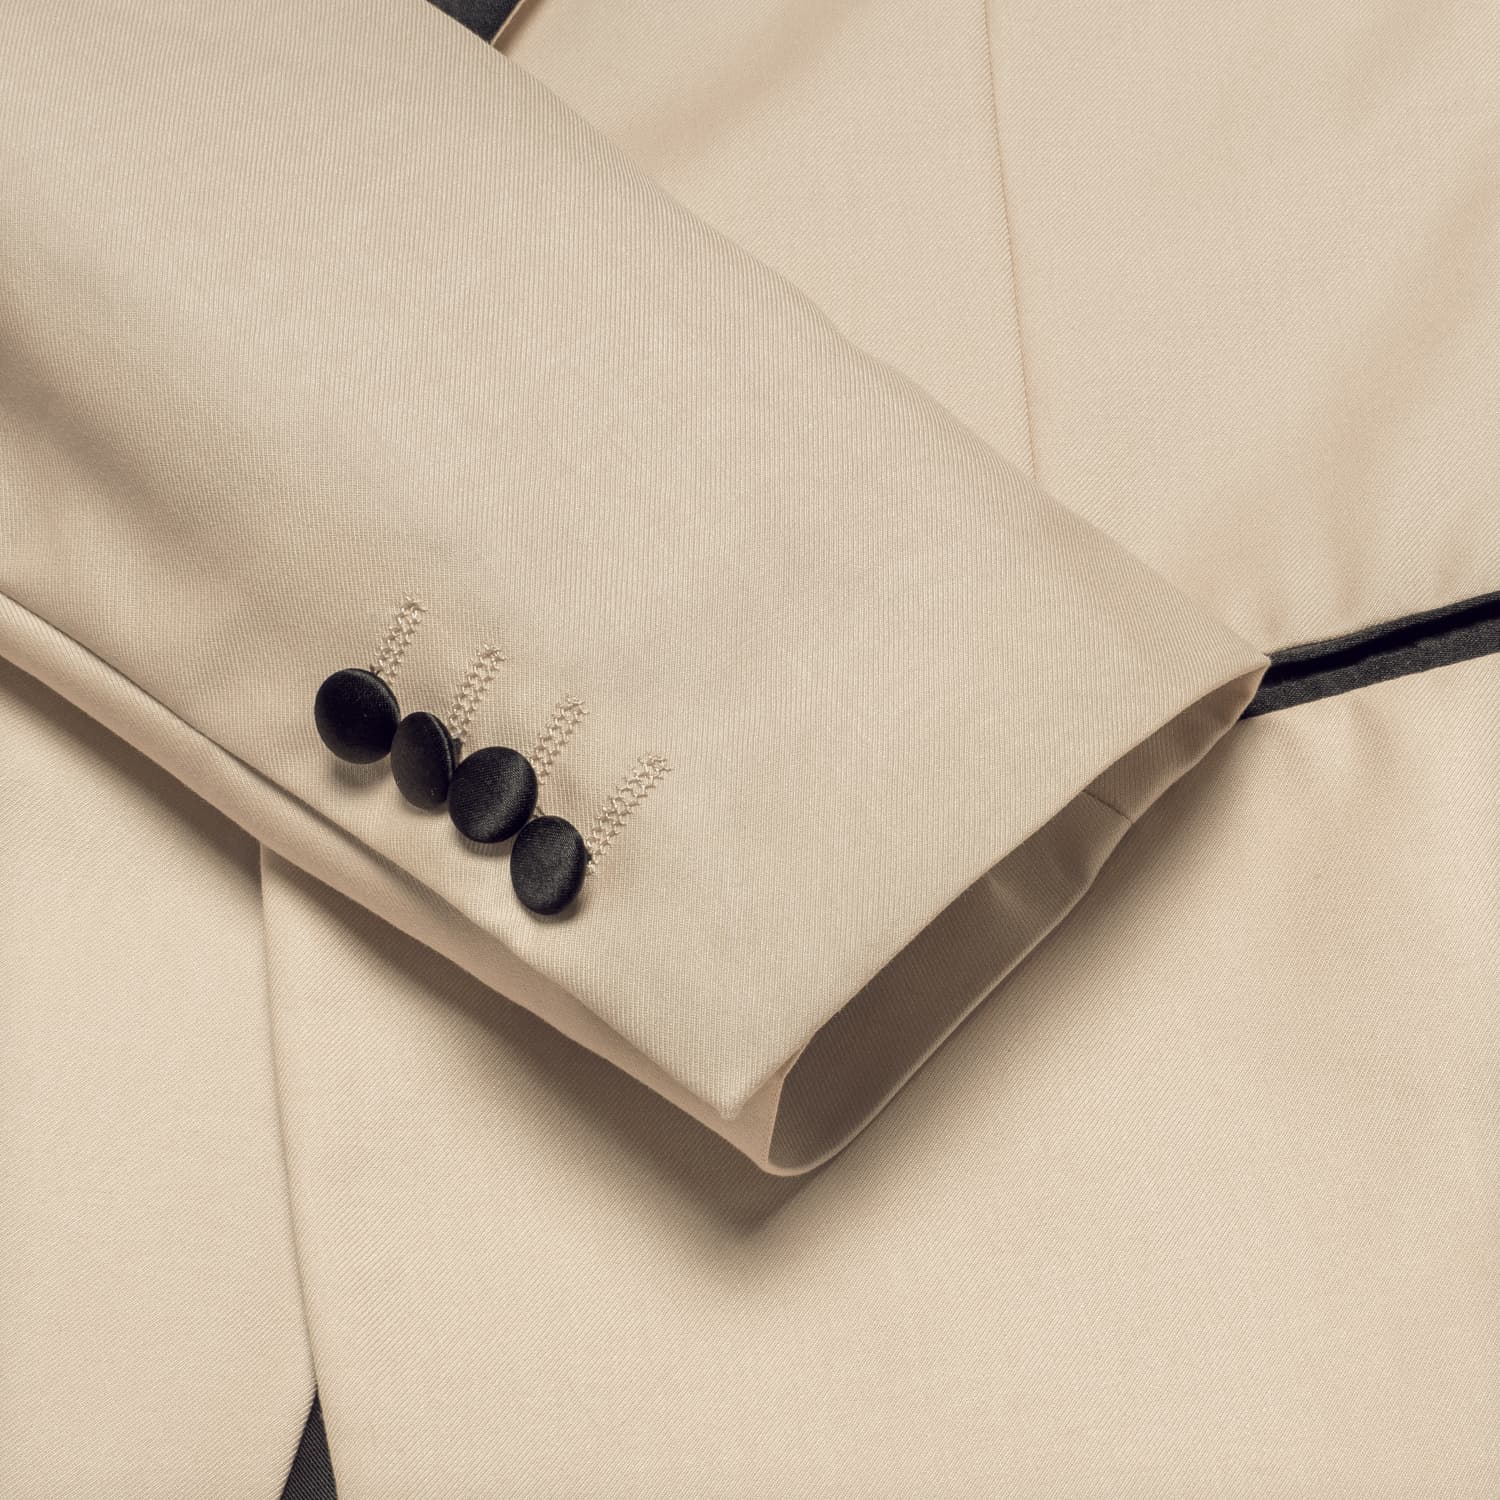  Black Shawl Collar Champagne Solid Blazer Bowtie Suit Set